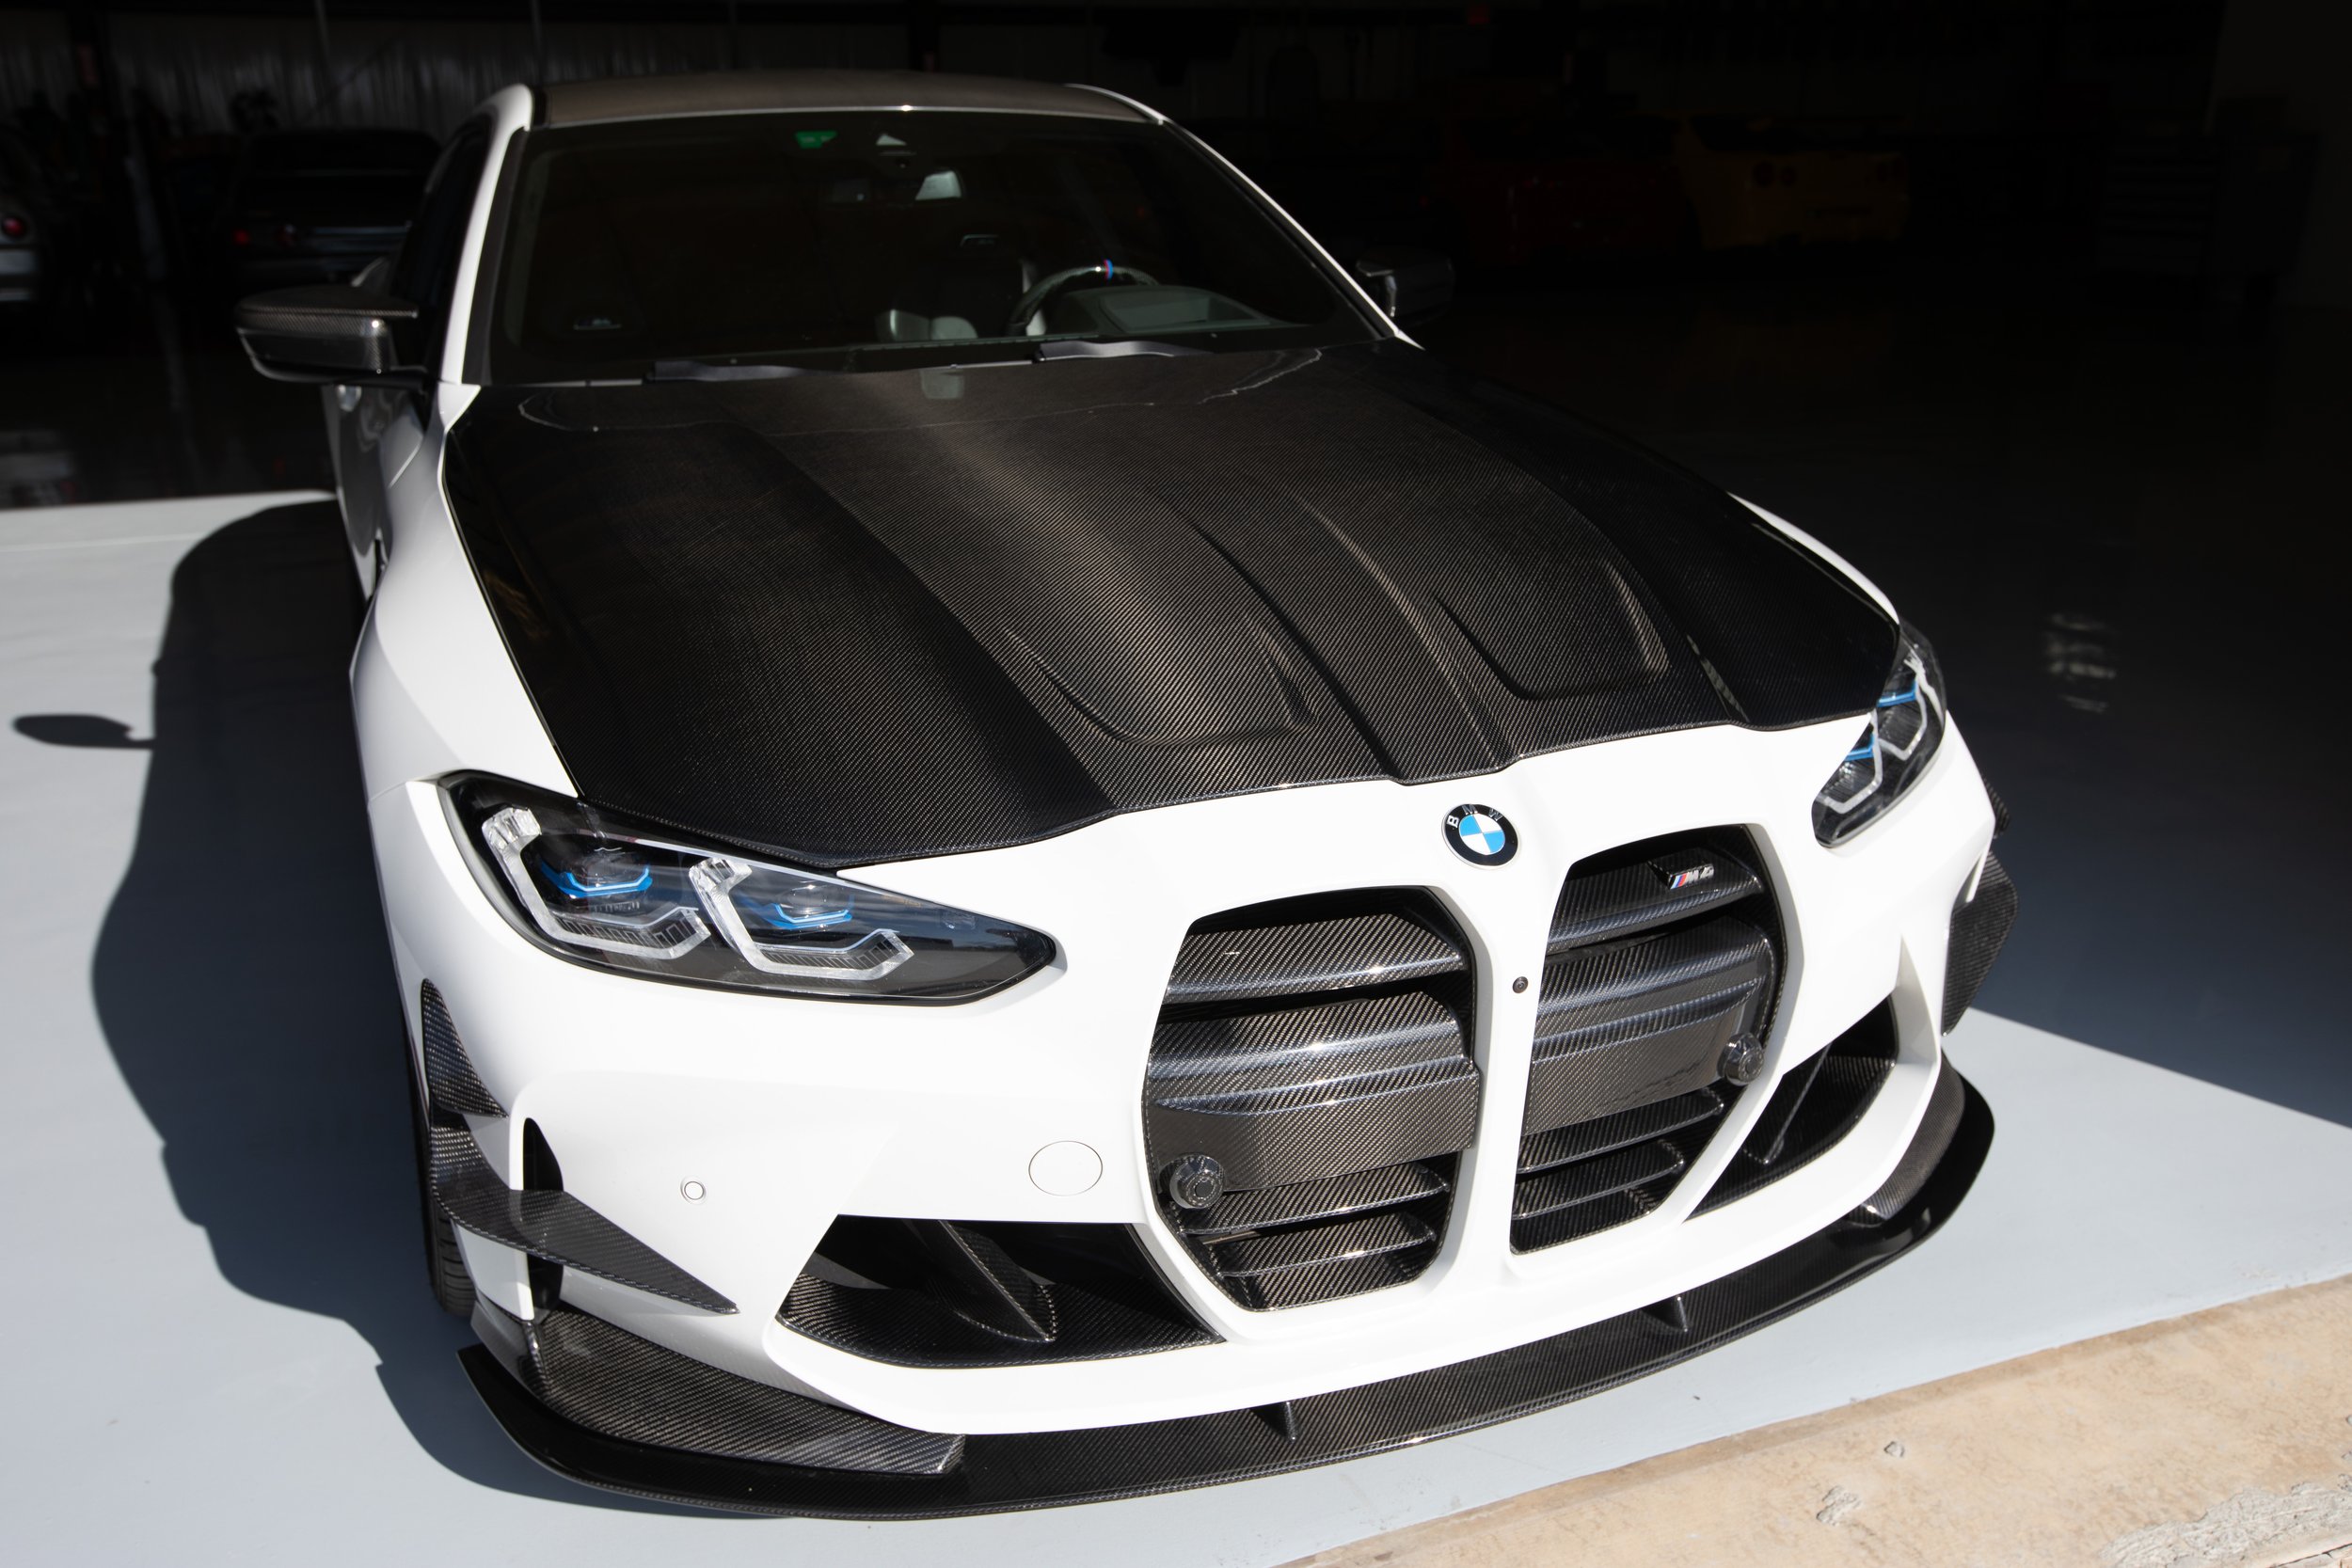 CSL Style Carbon Fiber Front Grille - BMW G26 4 Series